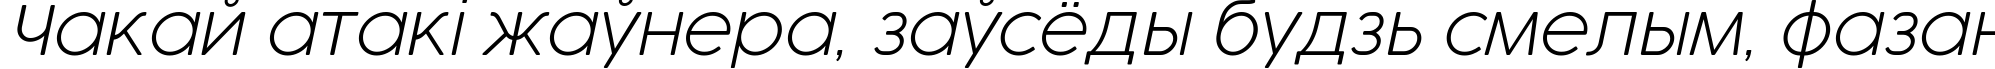 Пример написания шрифтом Cocogoose Pro UltraLight Italic текста на белорусском